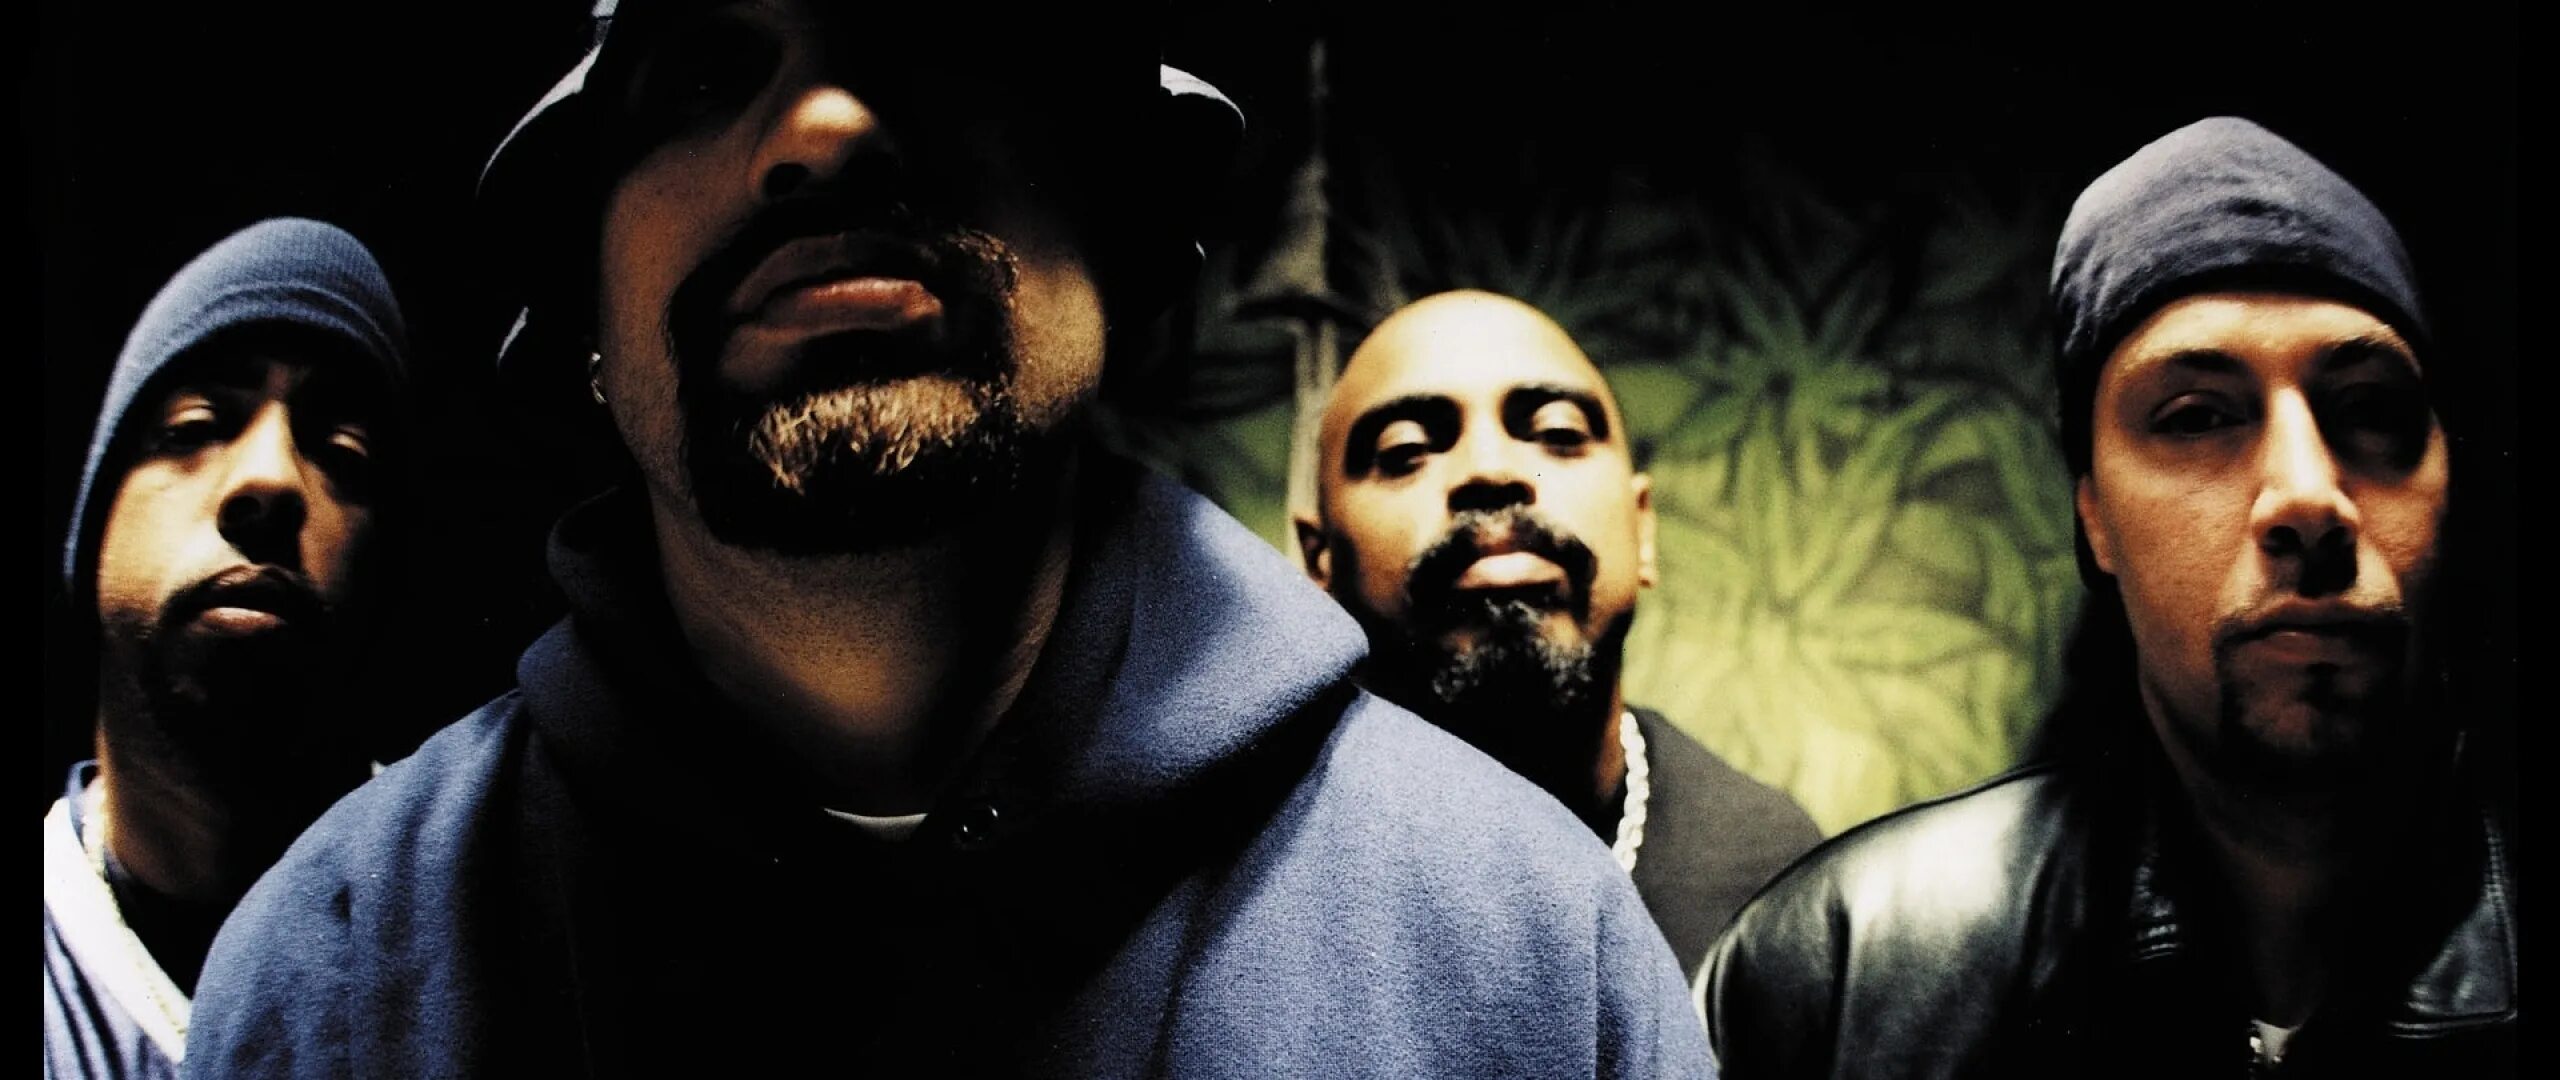 Insane in the brain hill. Сайпресс Хилл. Cypress Hill 1993. Группа Cypress Hill. Cypress Hill 1991.